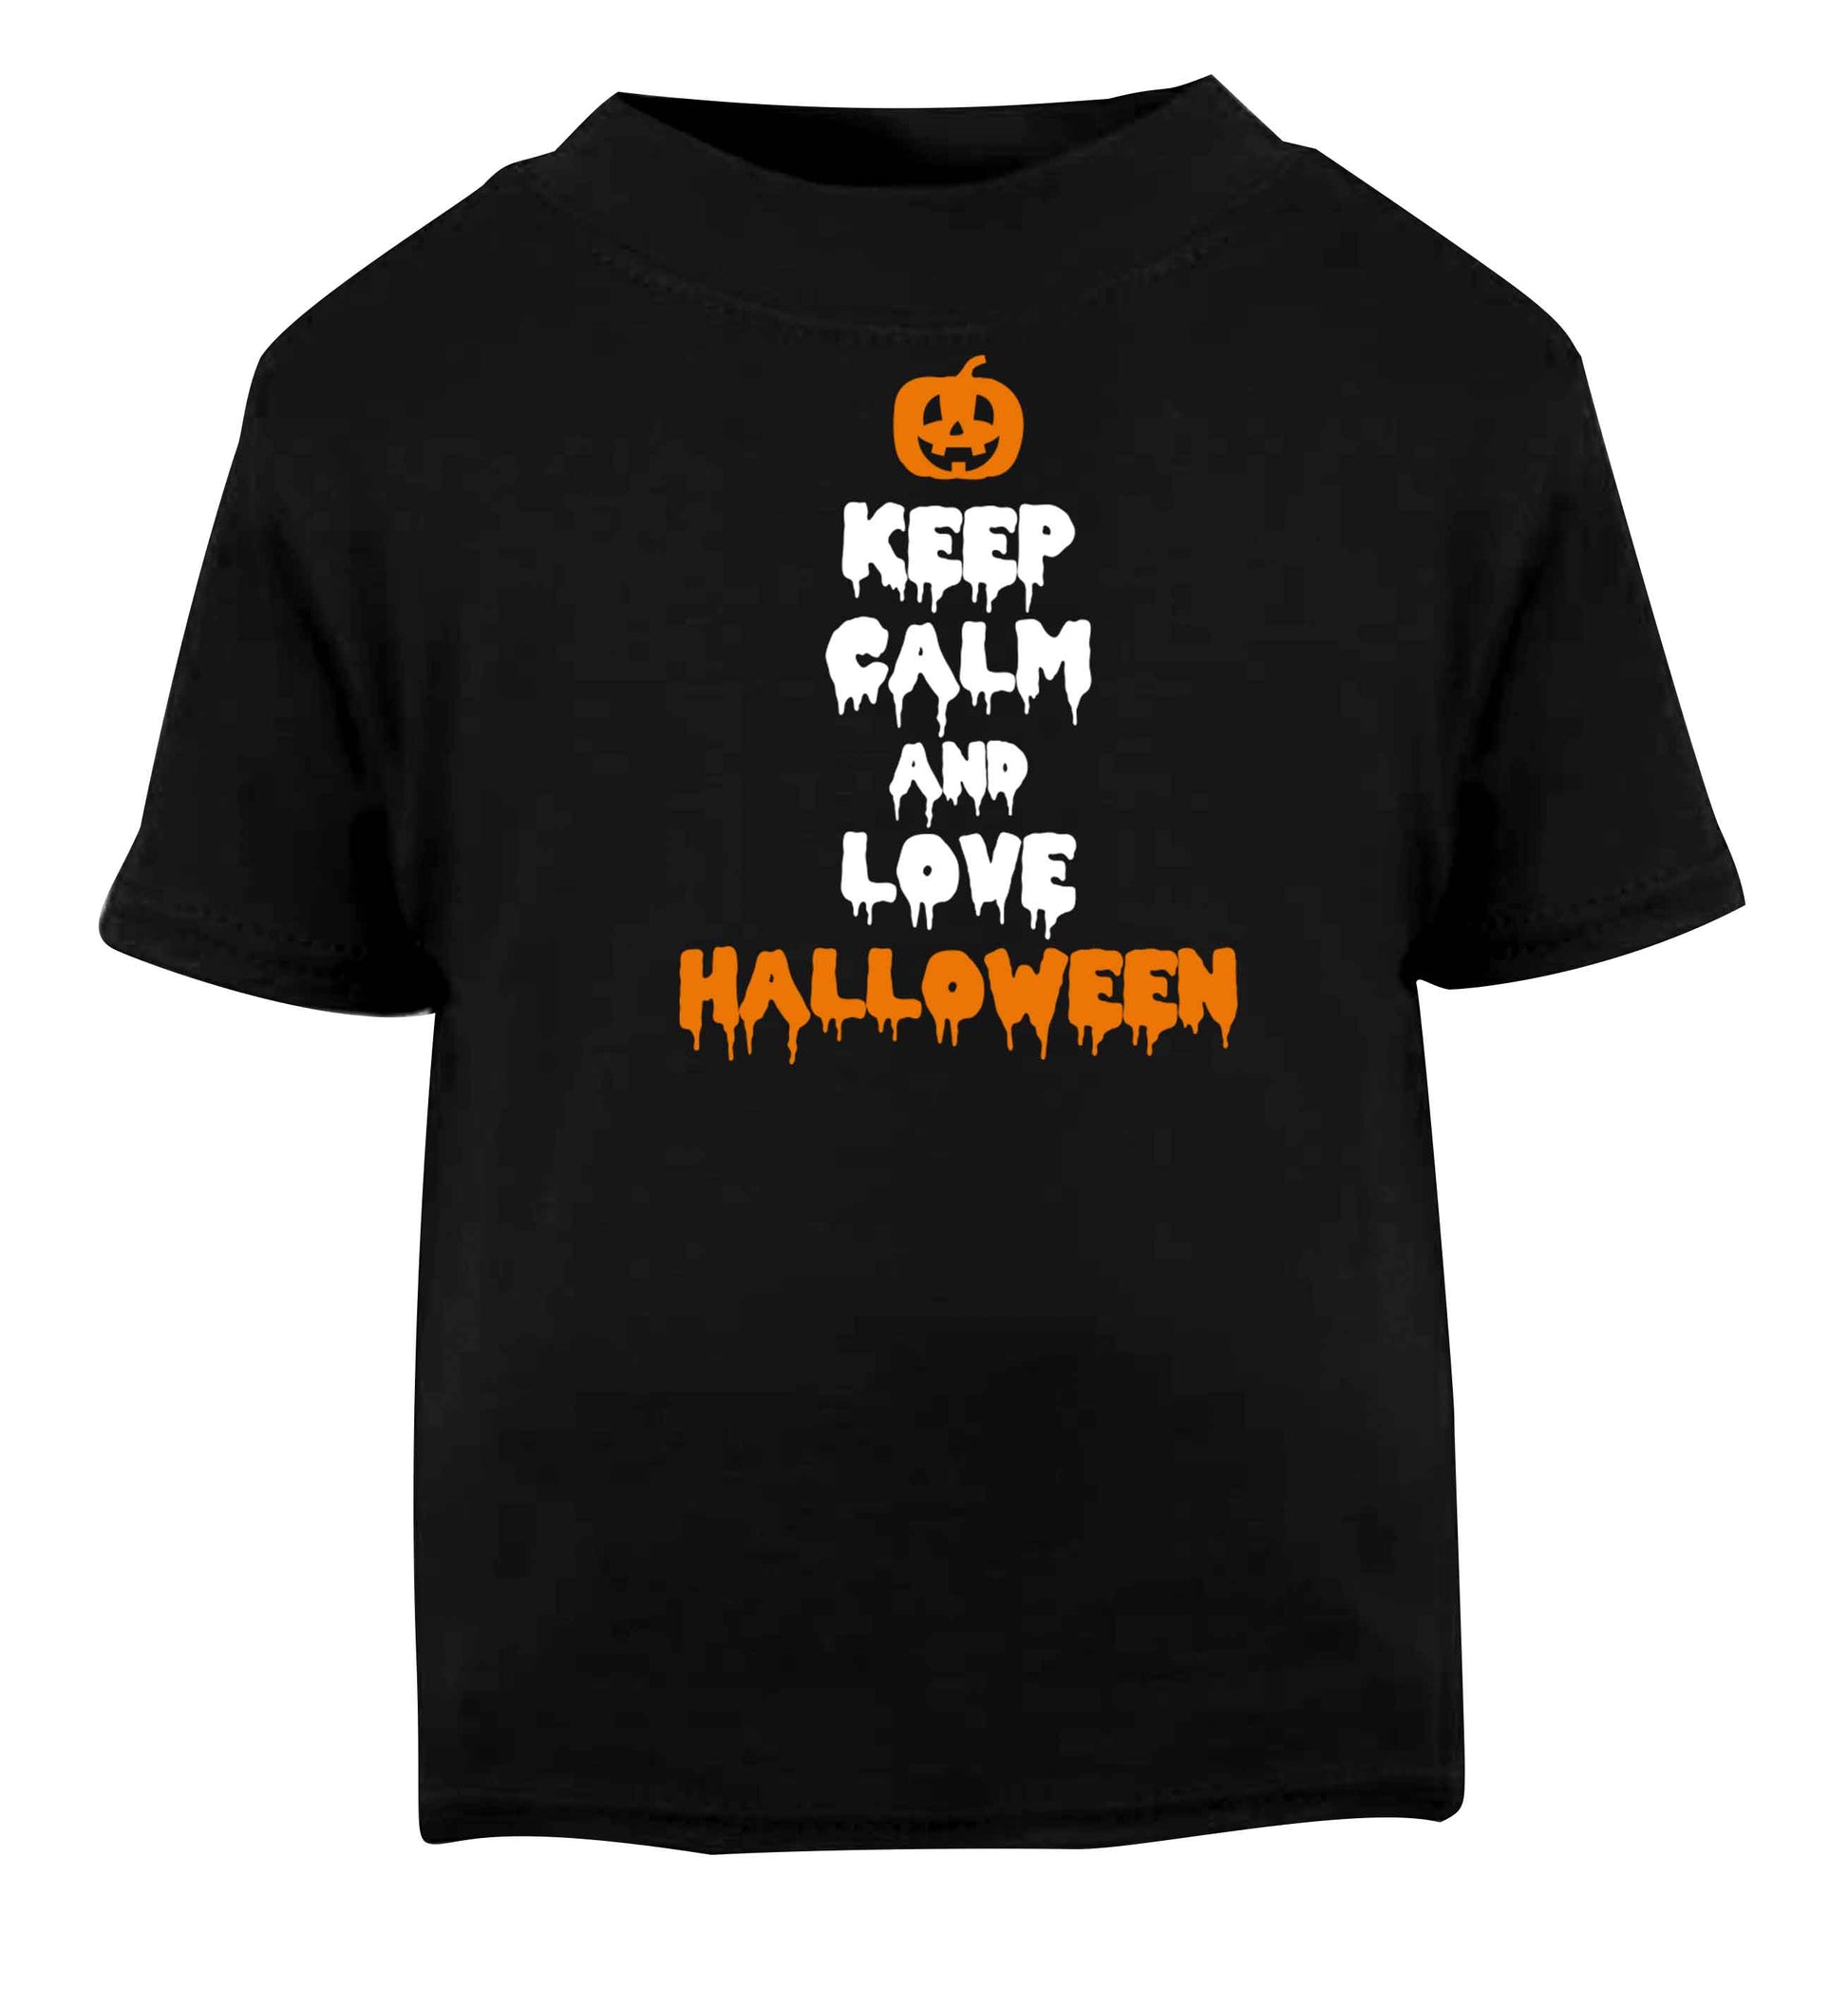 Keep calm and love halloween Black baby toddler Tshirt 2 years